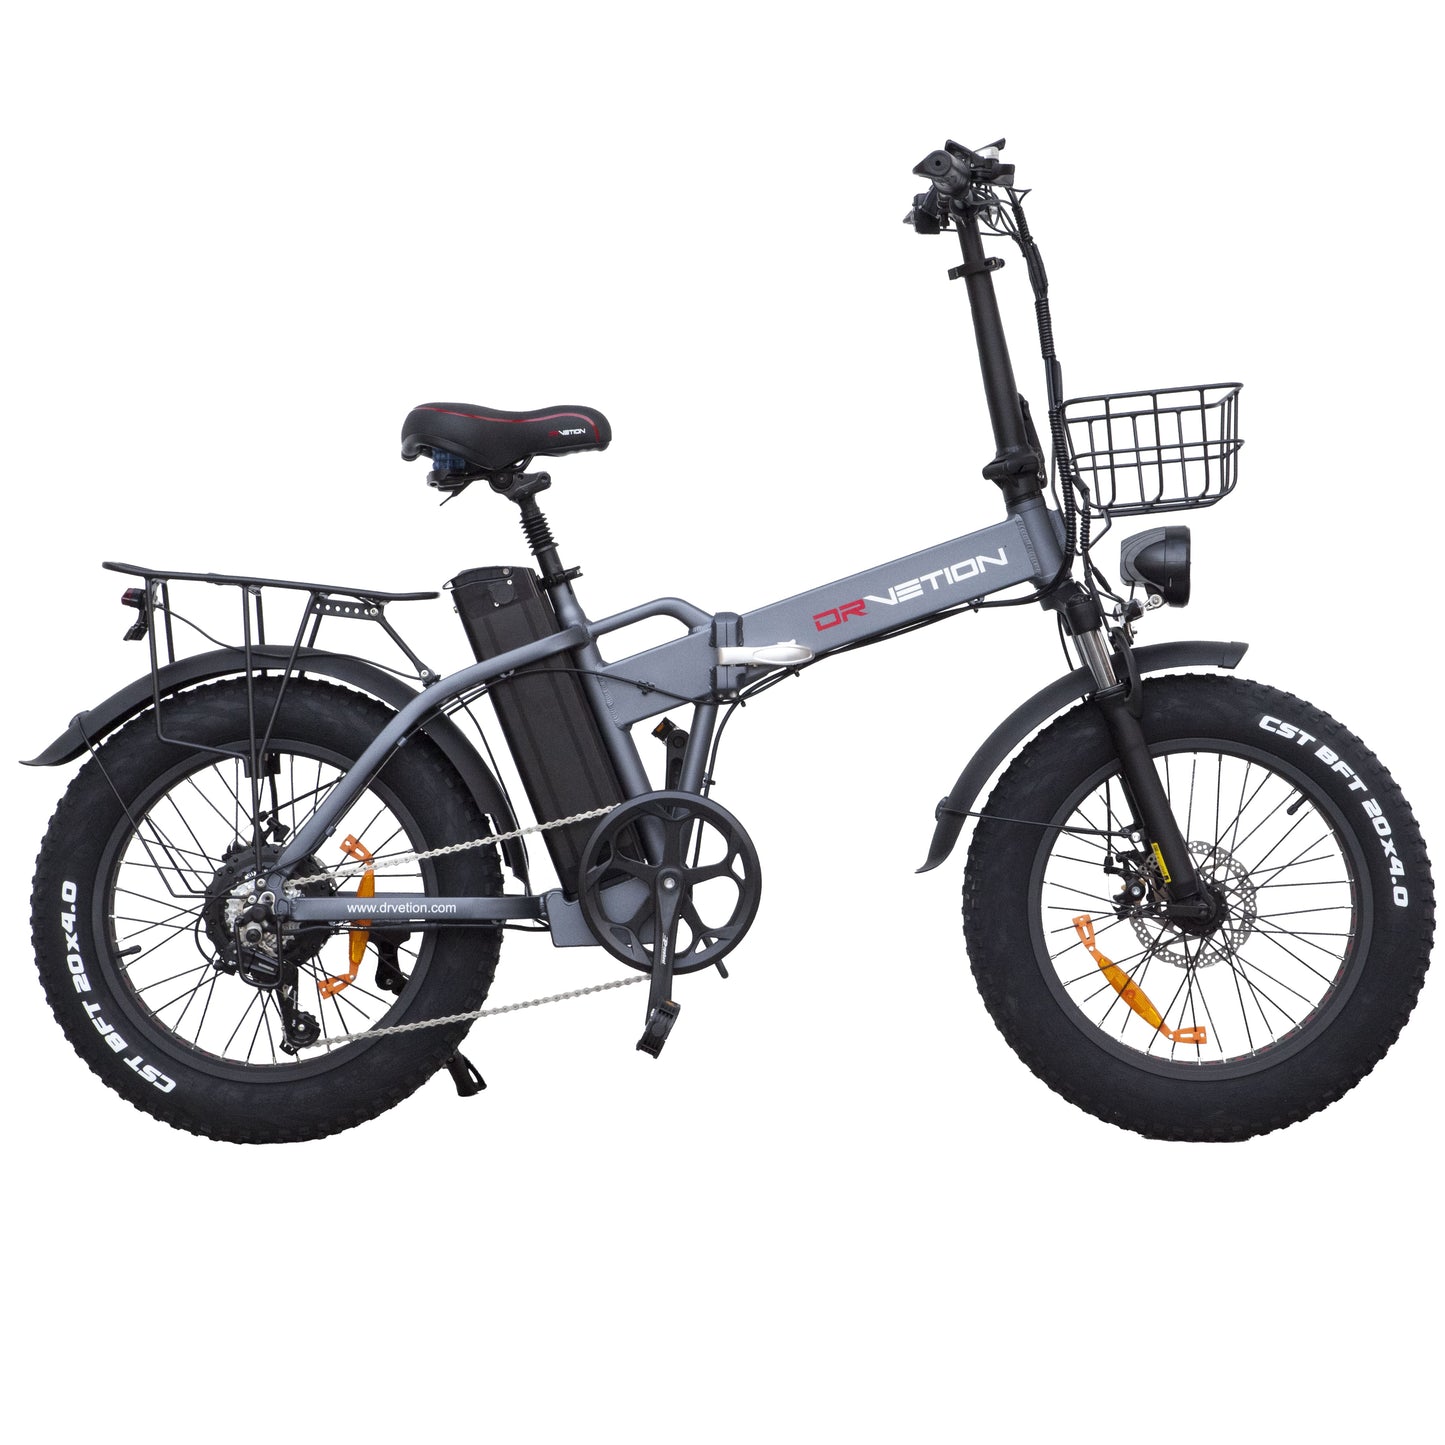 DrVetion AT20 750W Fat Bike Elektro fahrrad 45 km/h